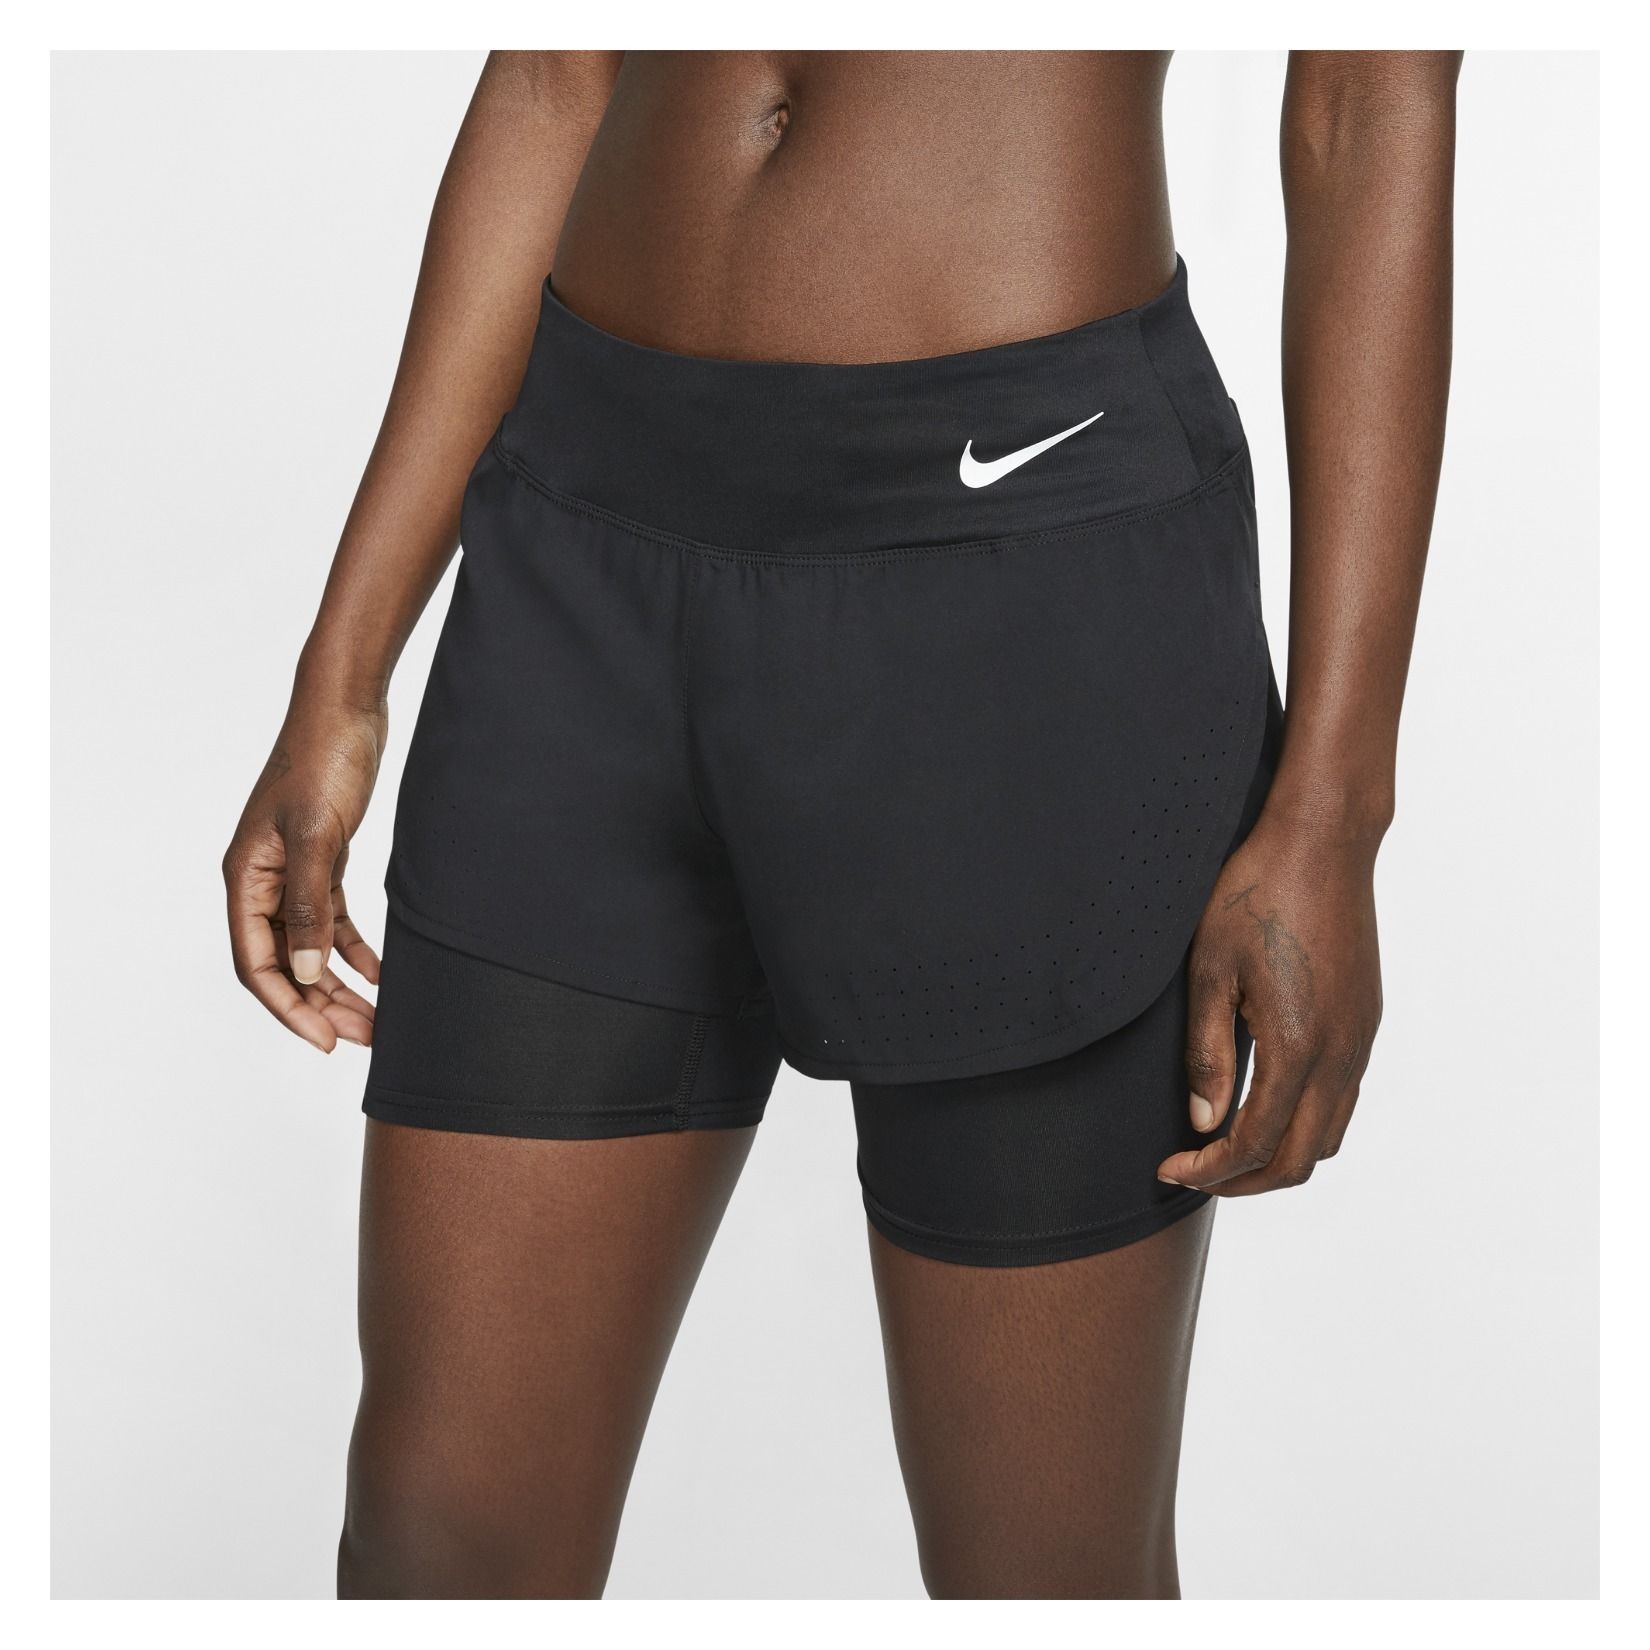 nike 2 in 1 running shorts womens